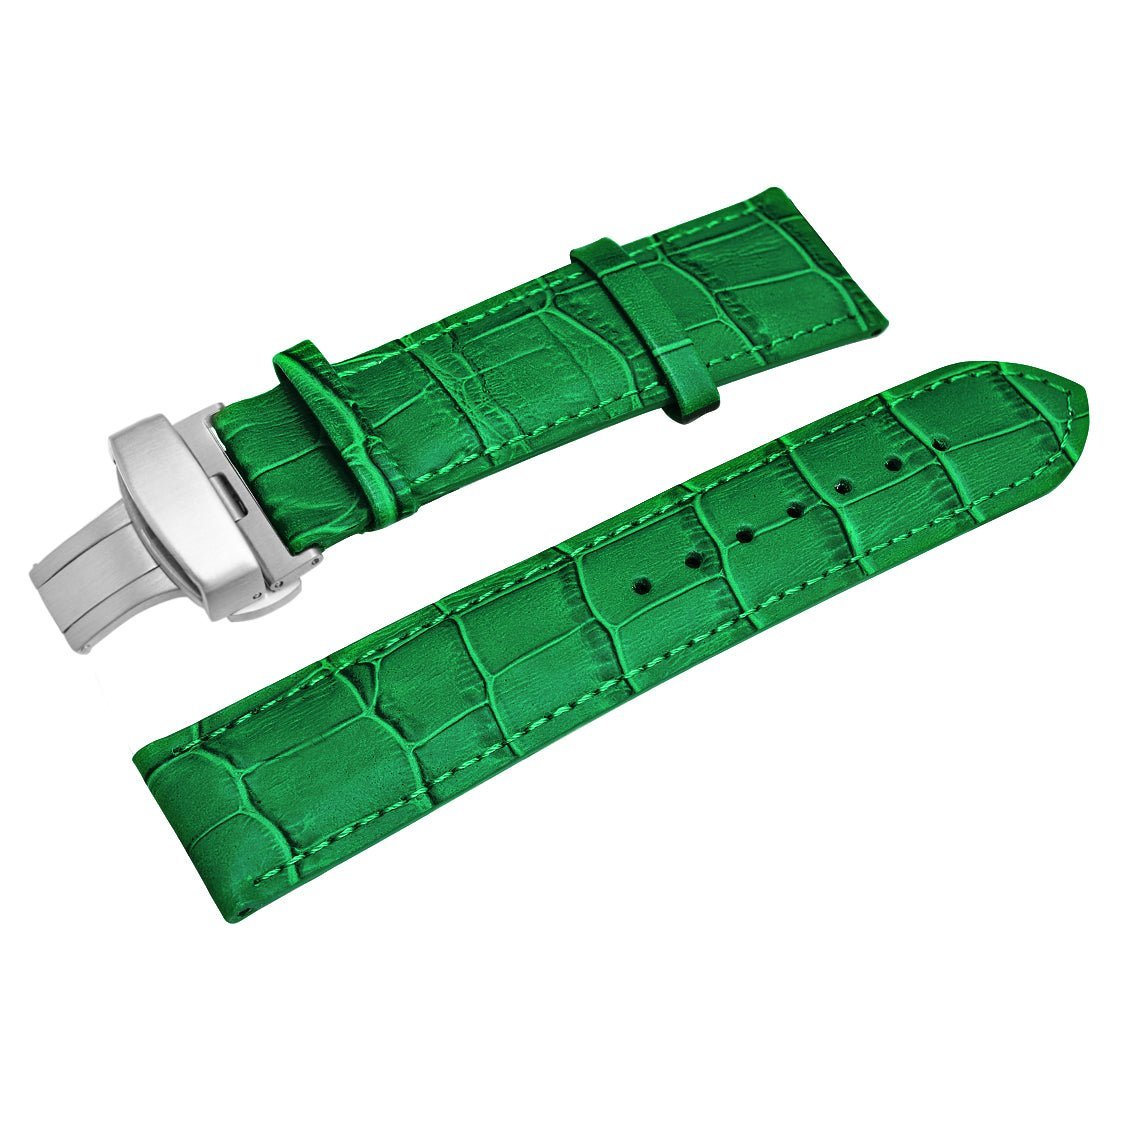 HERITAGE I watch strap, genuine cowhide, green alligator pattern. Elevate your SÖNER watch, brushed steel clasp.